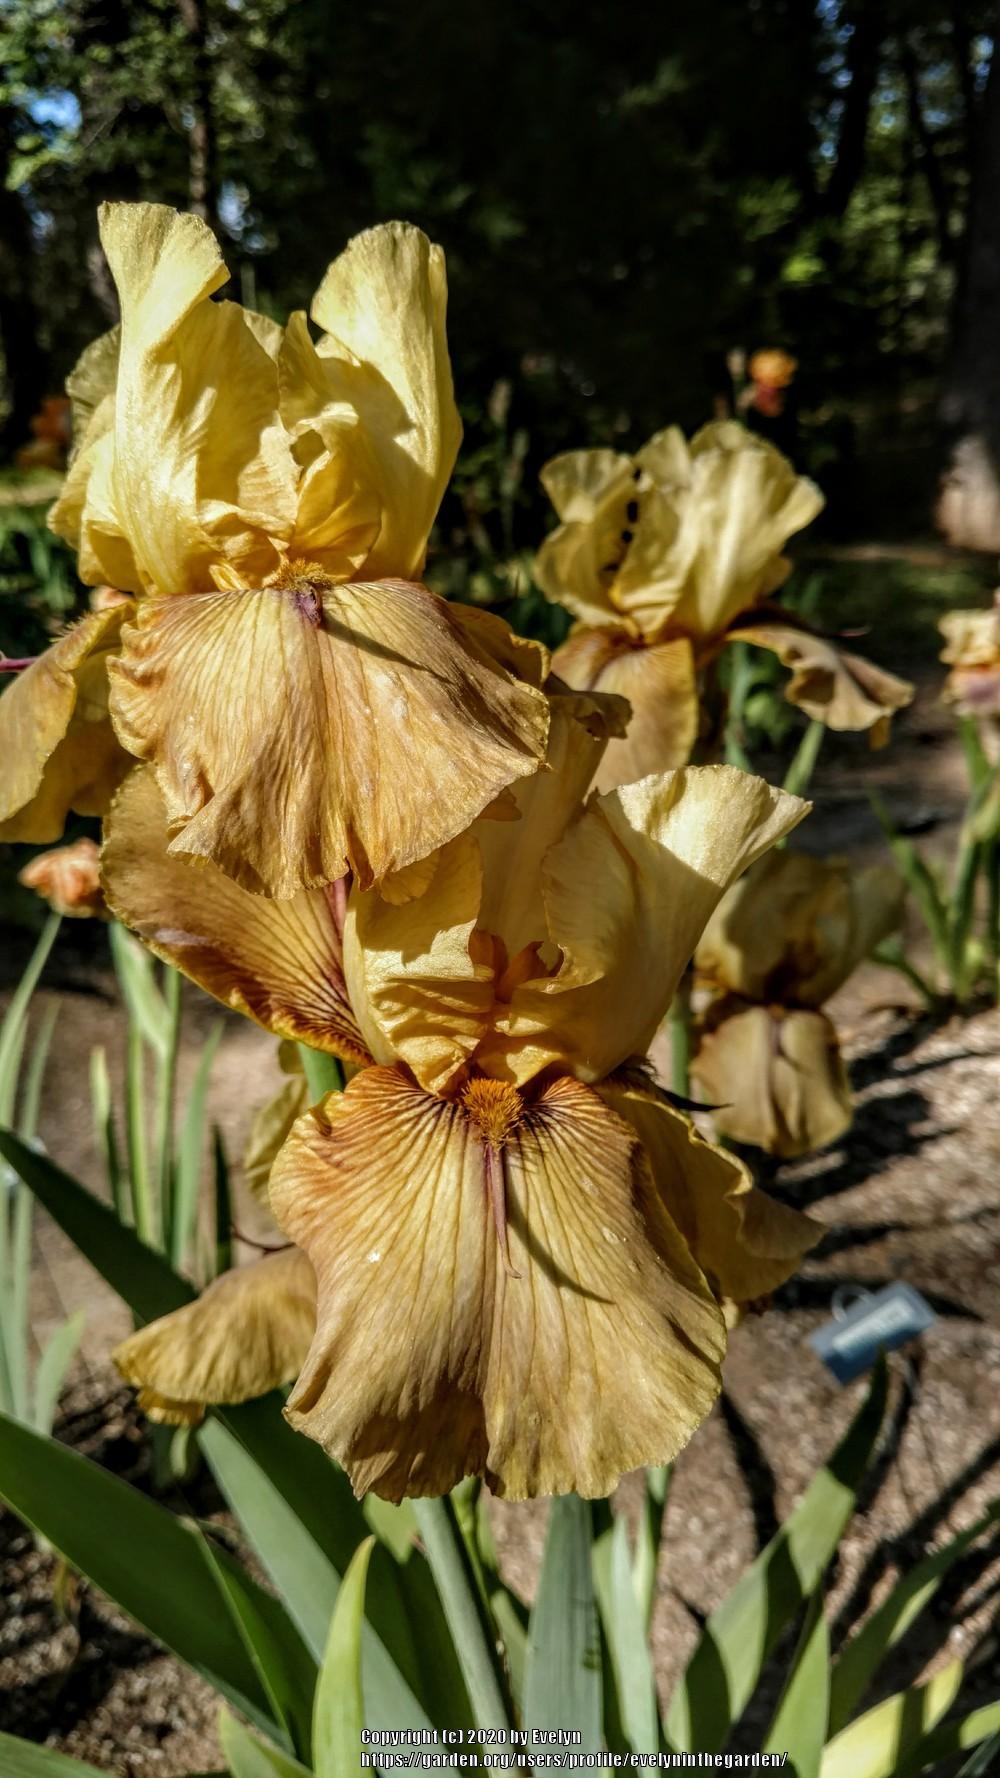 Photo of Tall Bearded Iris (Iris 'Thornbird') uploaded by evelyninthegarden